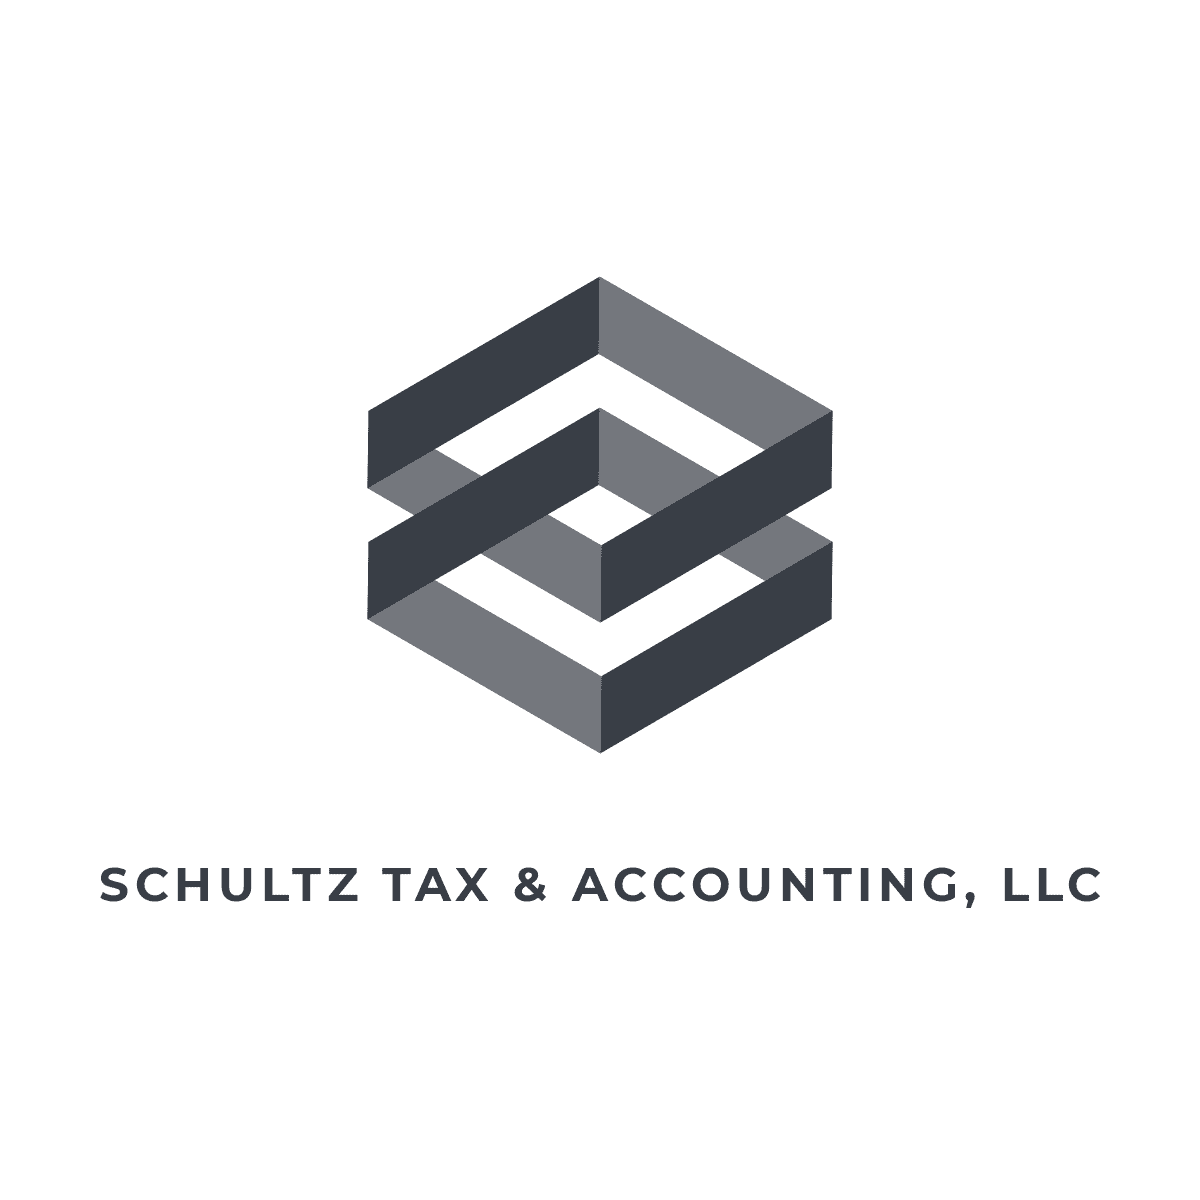 Schultz Tax & Accounting, LLC 211 N Center St, Sebewaing Michigan 48759